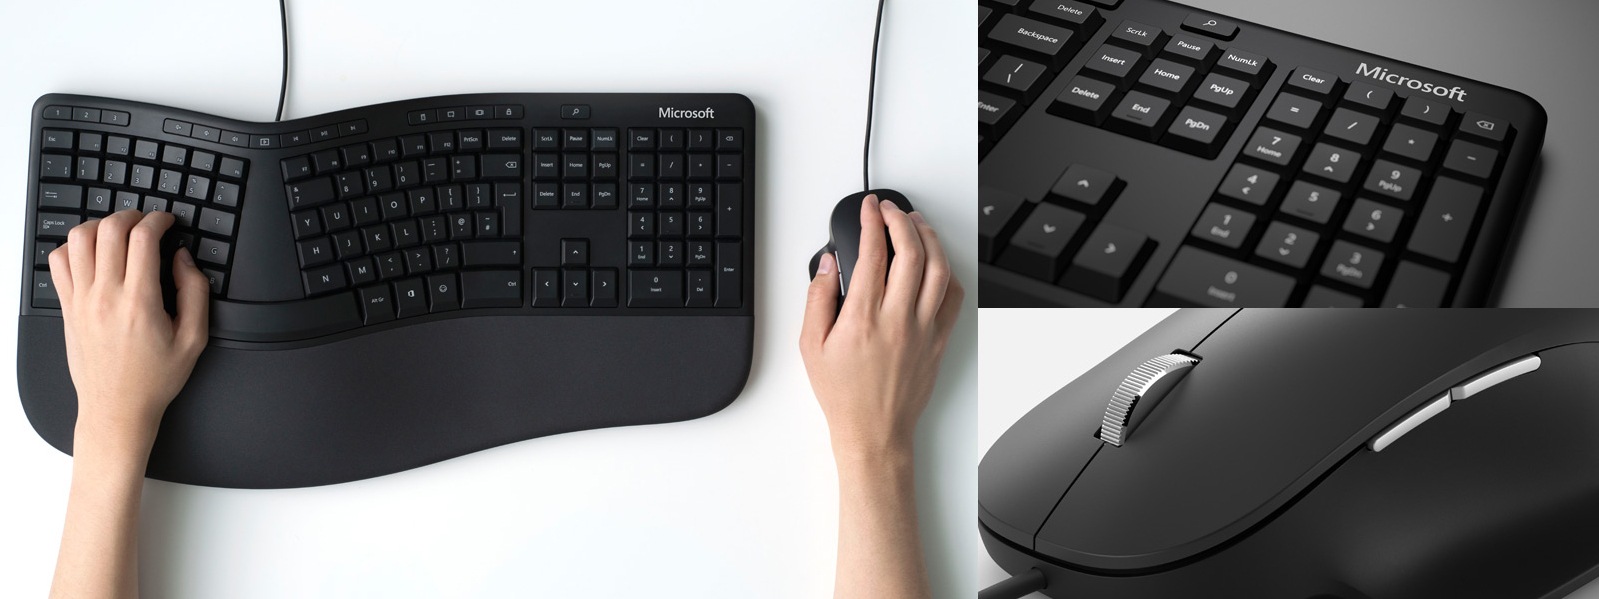 Más detalles de Microsoft Ergonomic Keyboard y Microsoft Ergonomic Mouse
